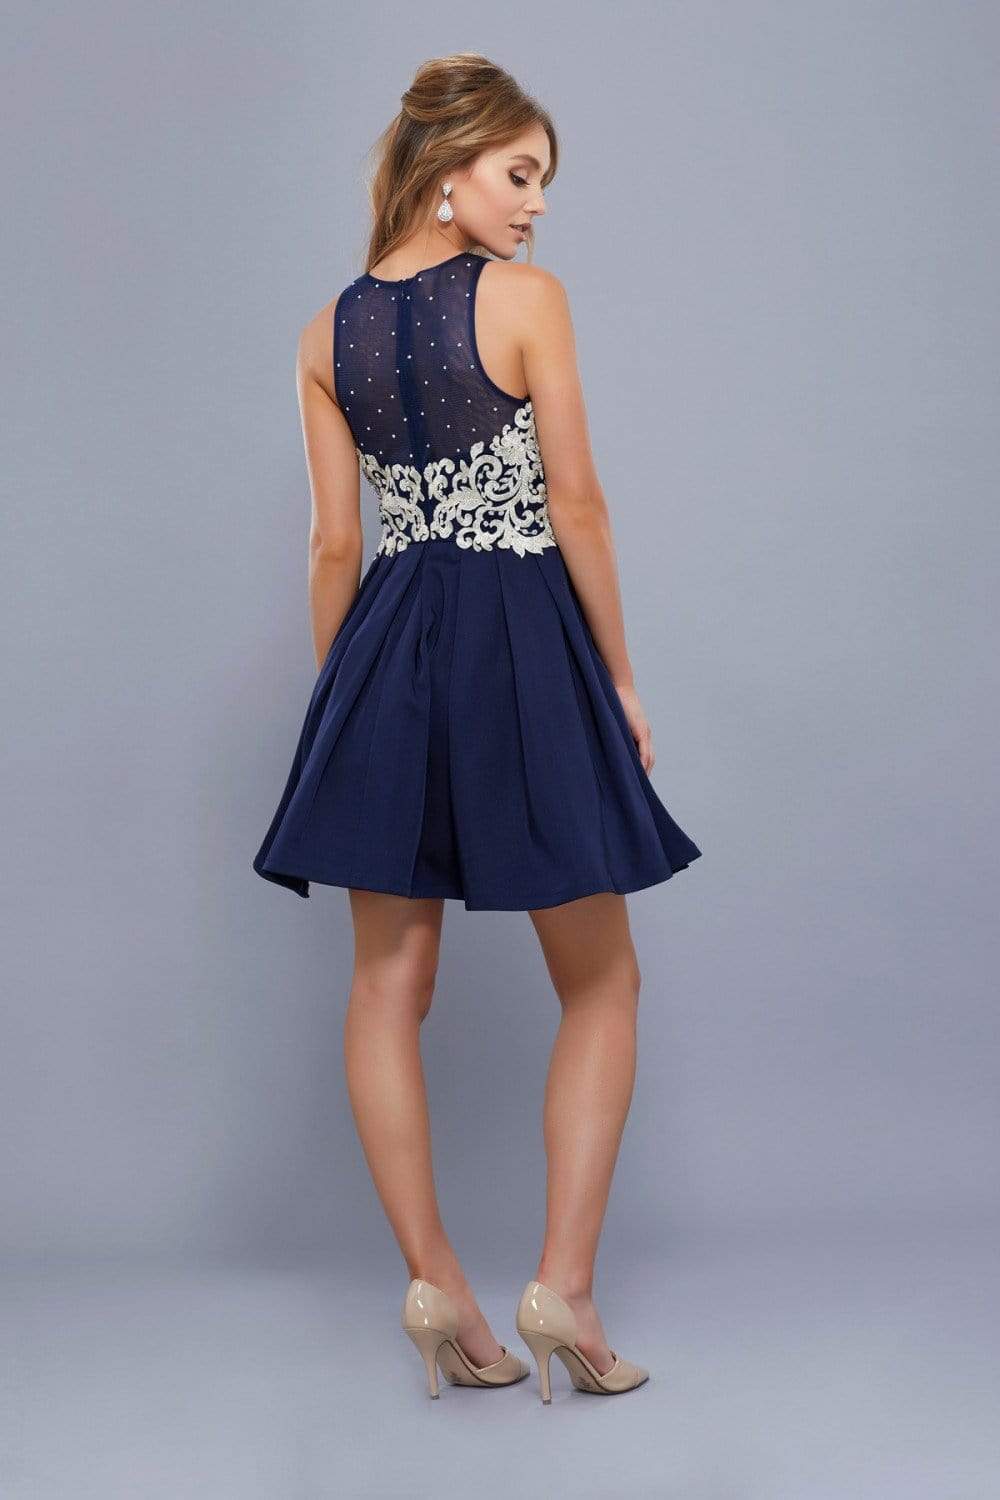 Nox Anabel - 6338 Metallic Appliqued Illusion Jewel A-Line Dress Homecoming Dresses